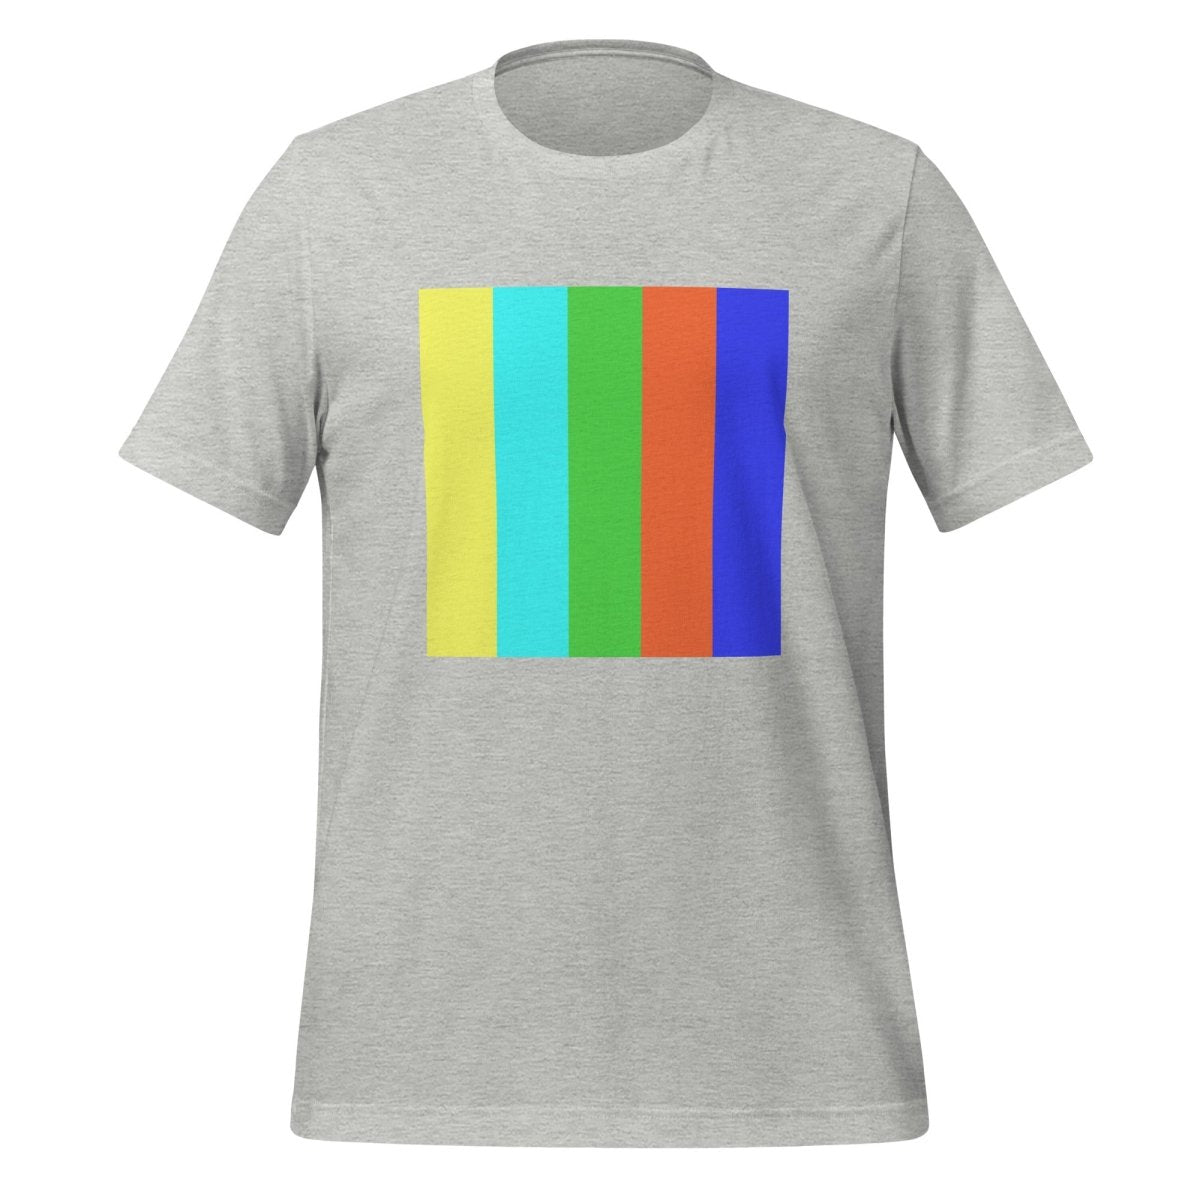 DALL - E 2 Square Watermark T - Shirt (unisex) - Athletic Heather - AI Store